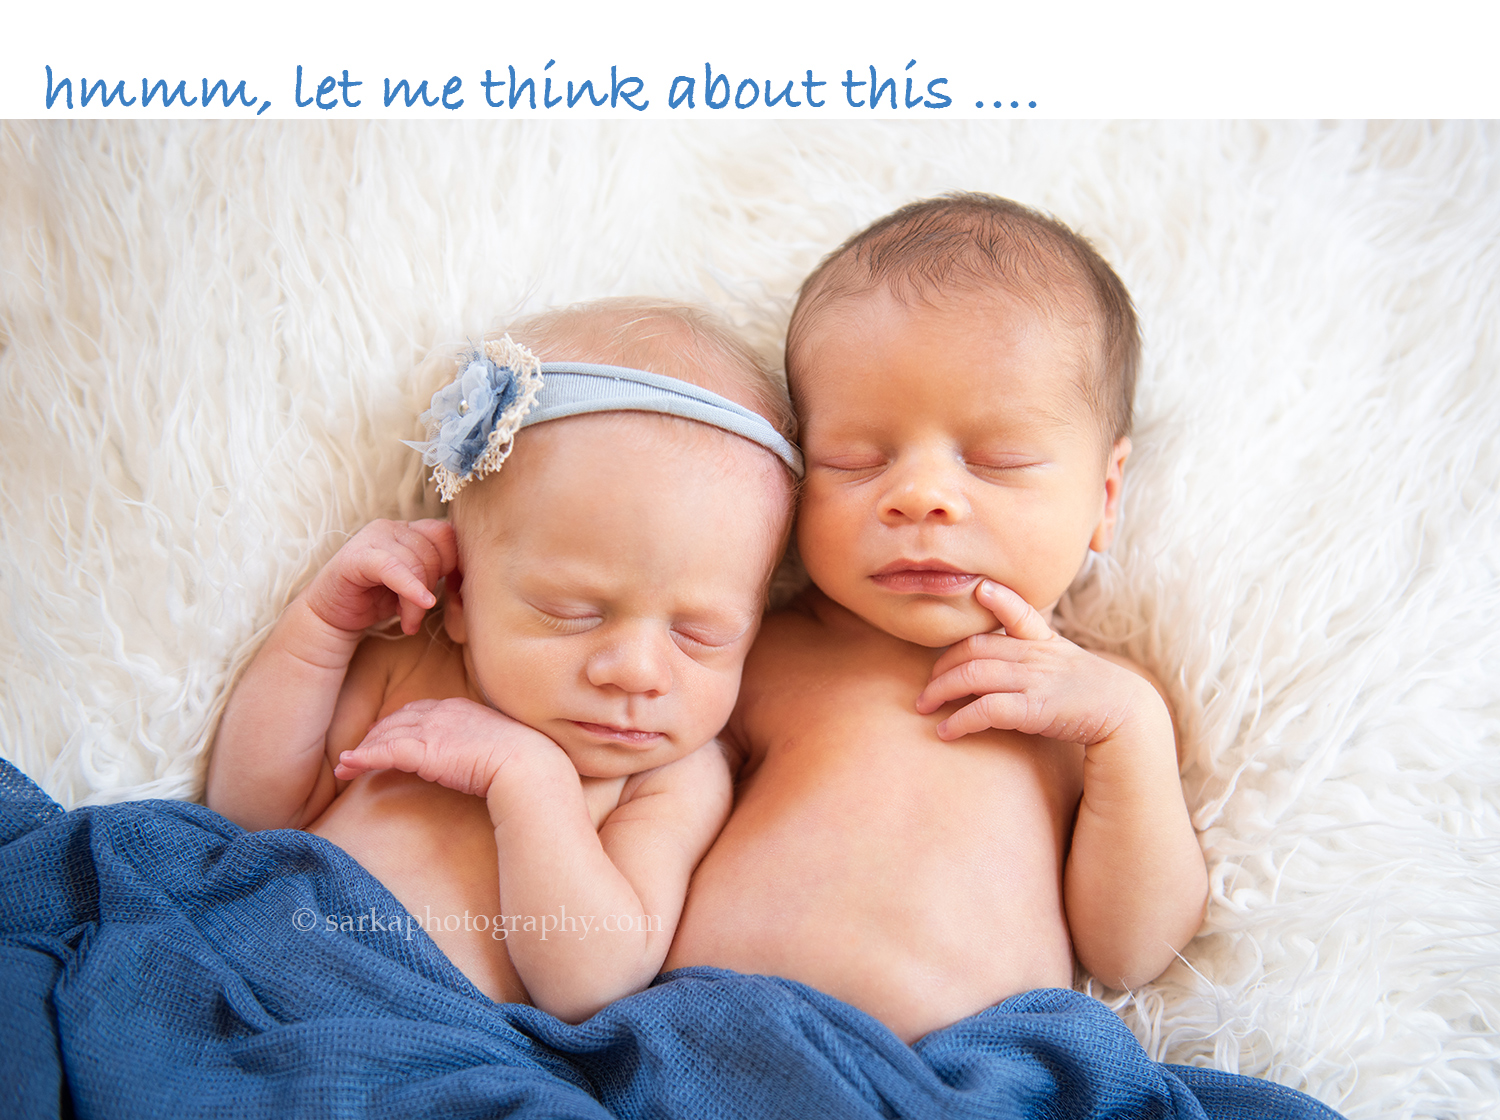 newborn twins sleeping next to each other during their newborn photo session in Santa Barbara